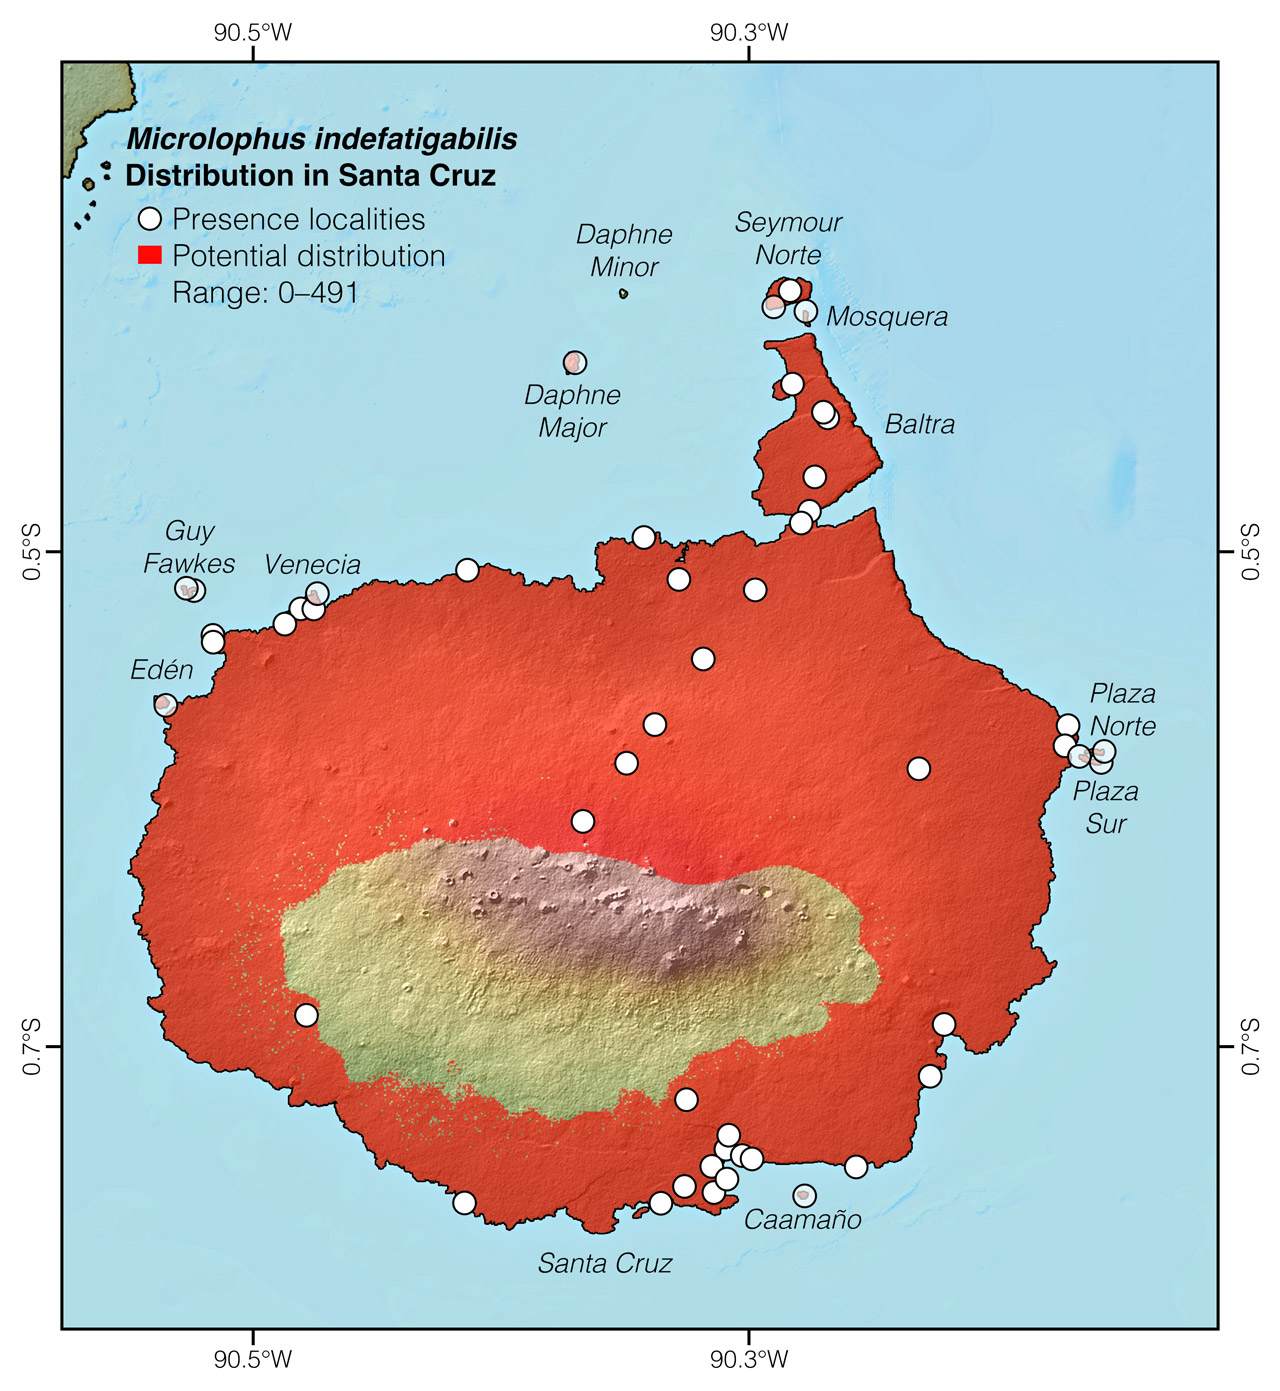 Distribution of Microlophus indefatigabilis in Santa Cruz Island